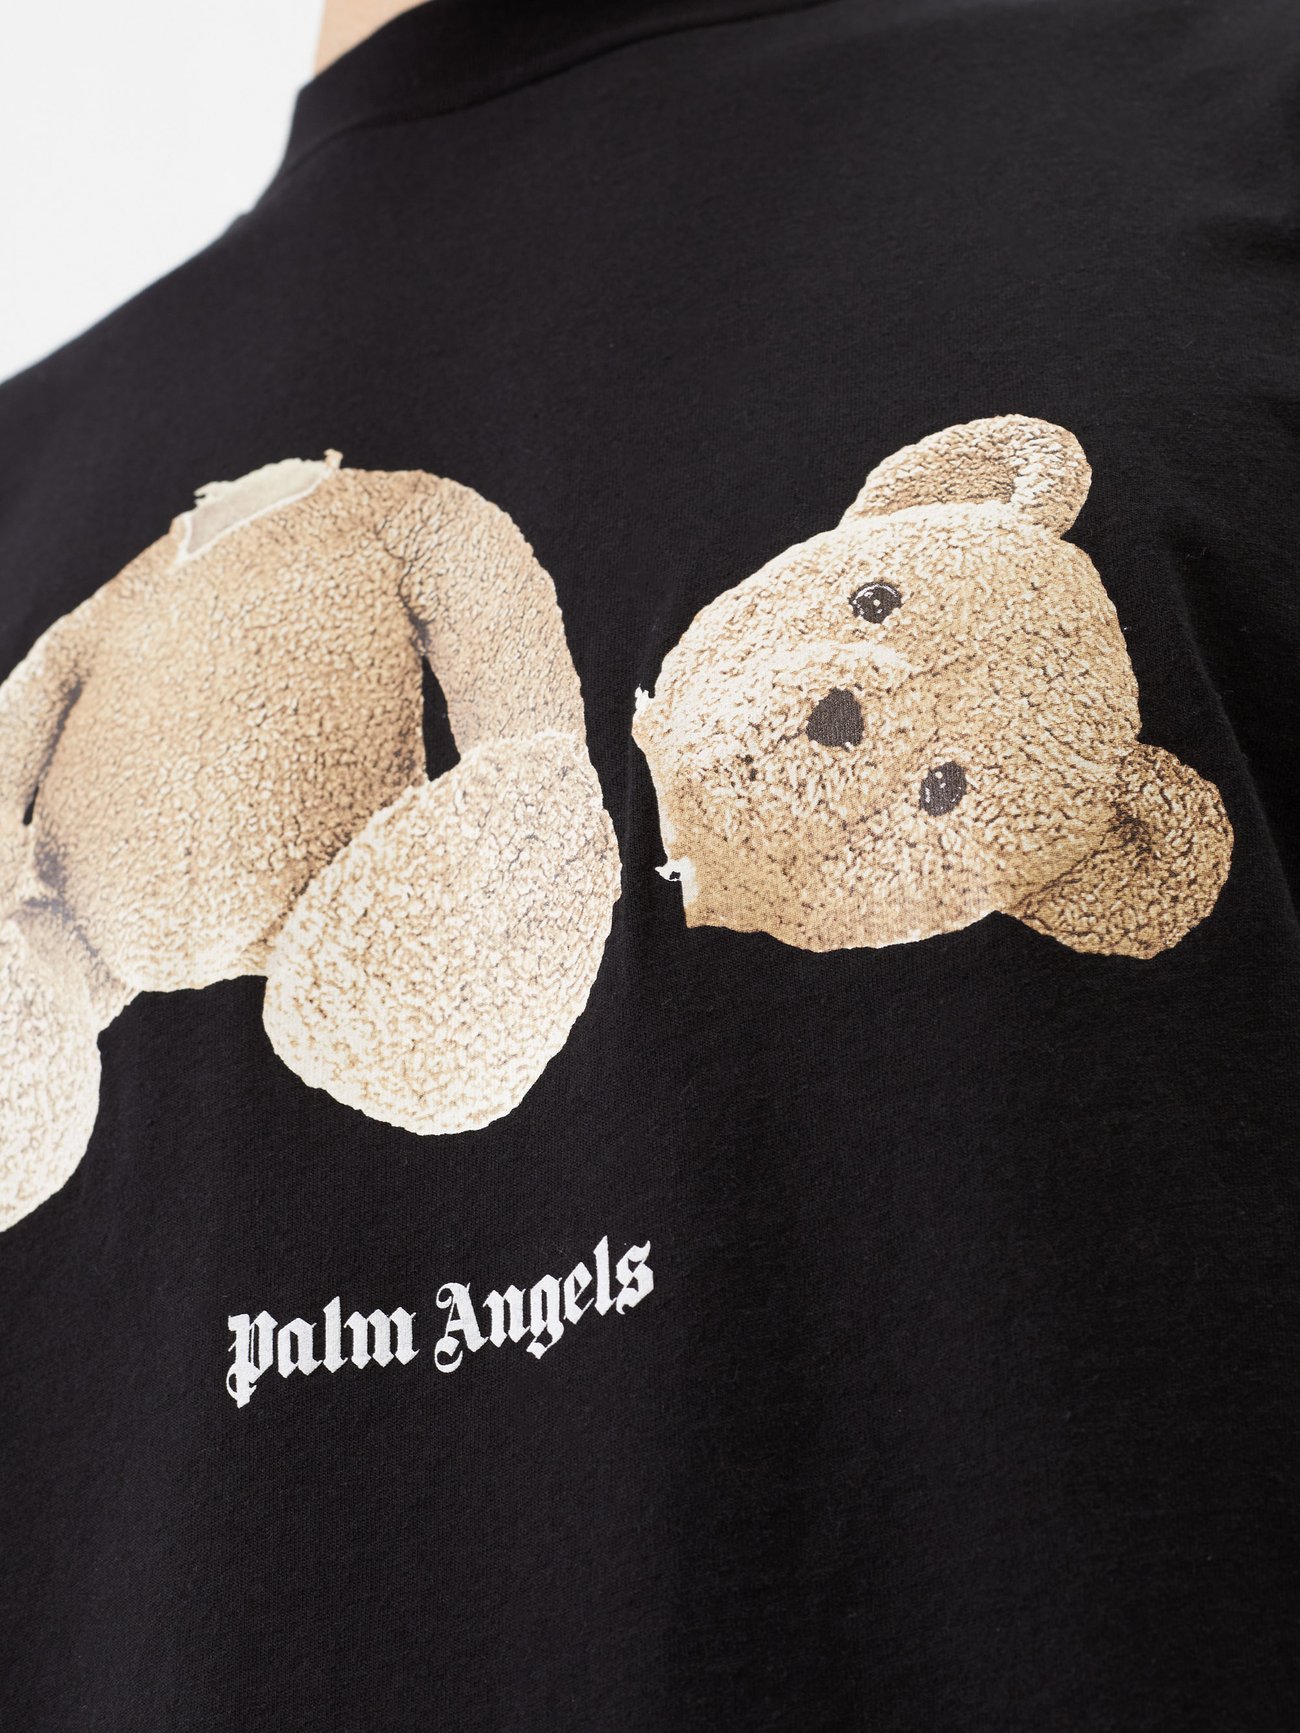 Palm Angels Teddy Bear T-shirt in White for Men